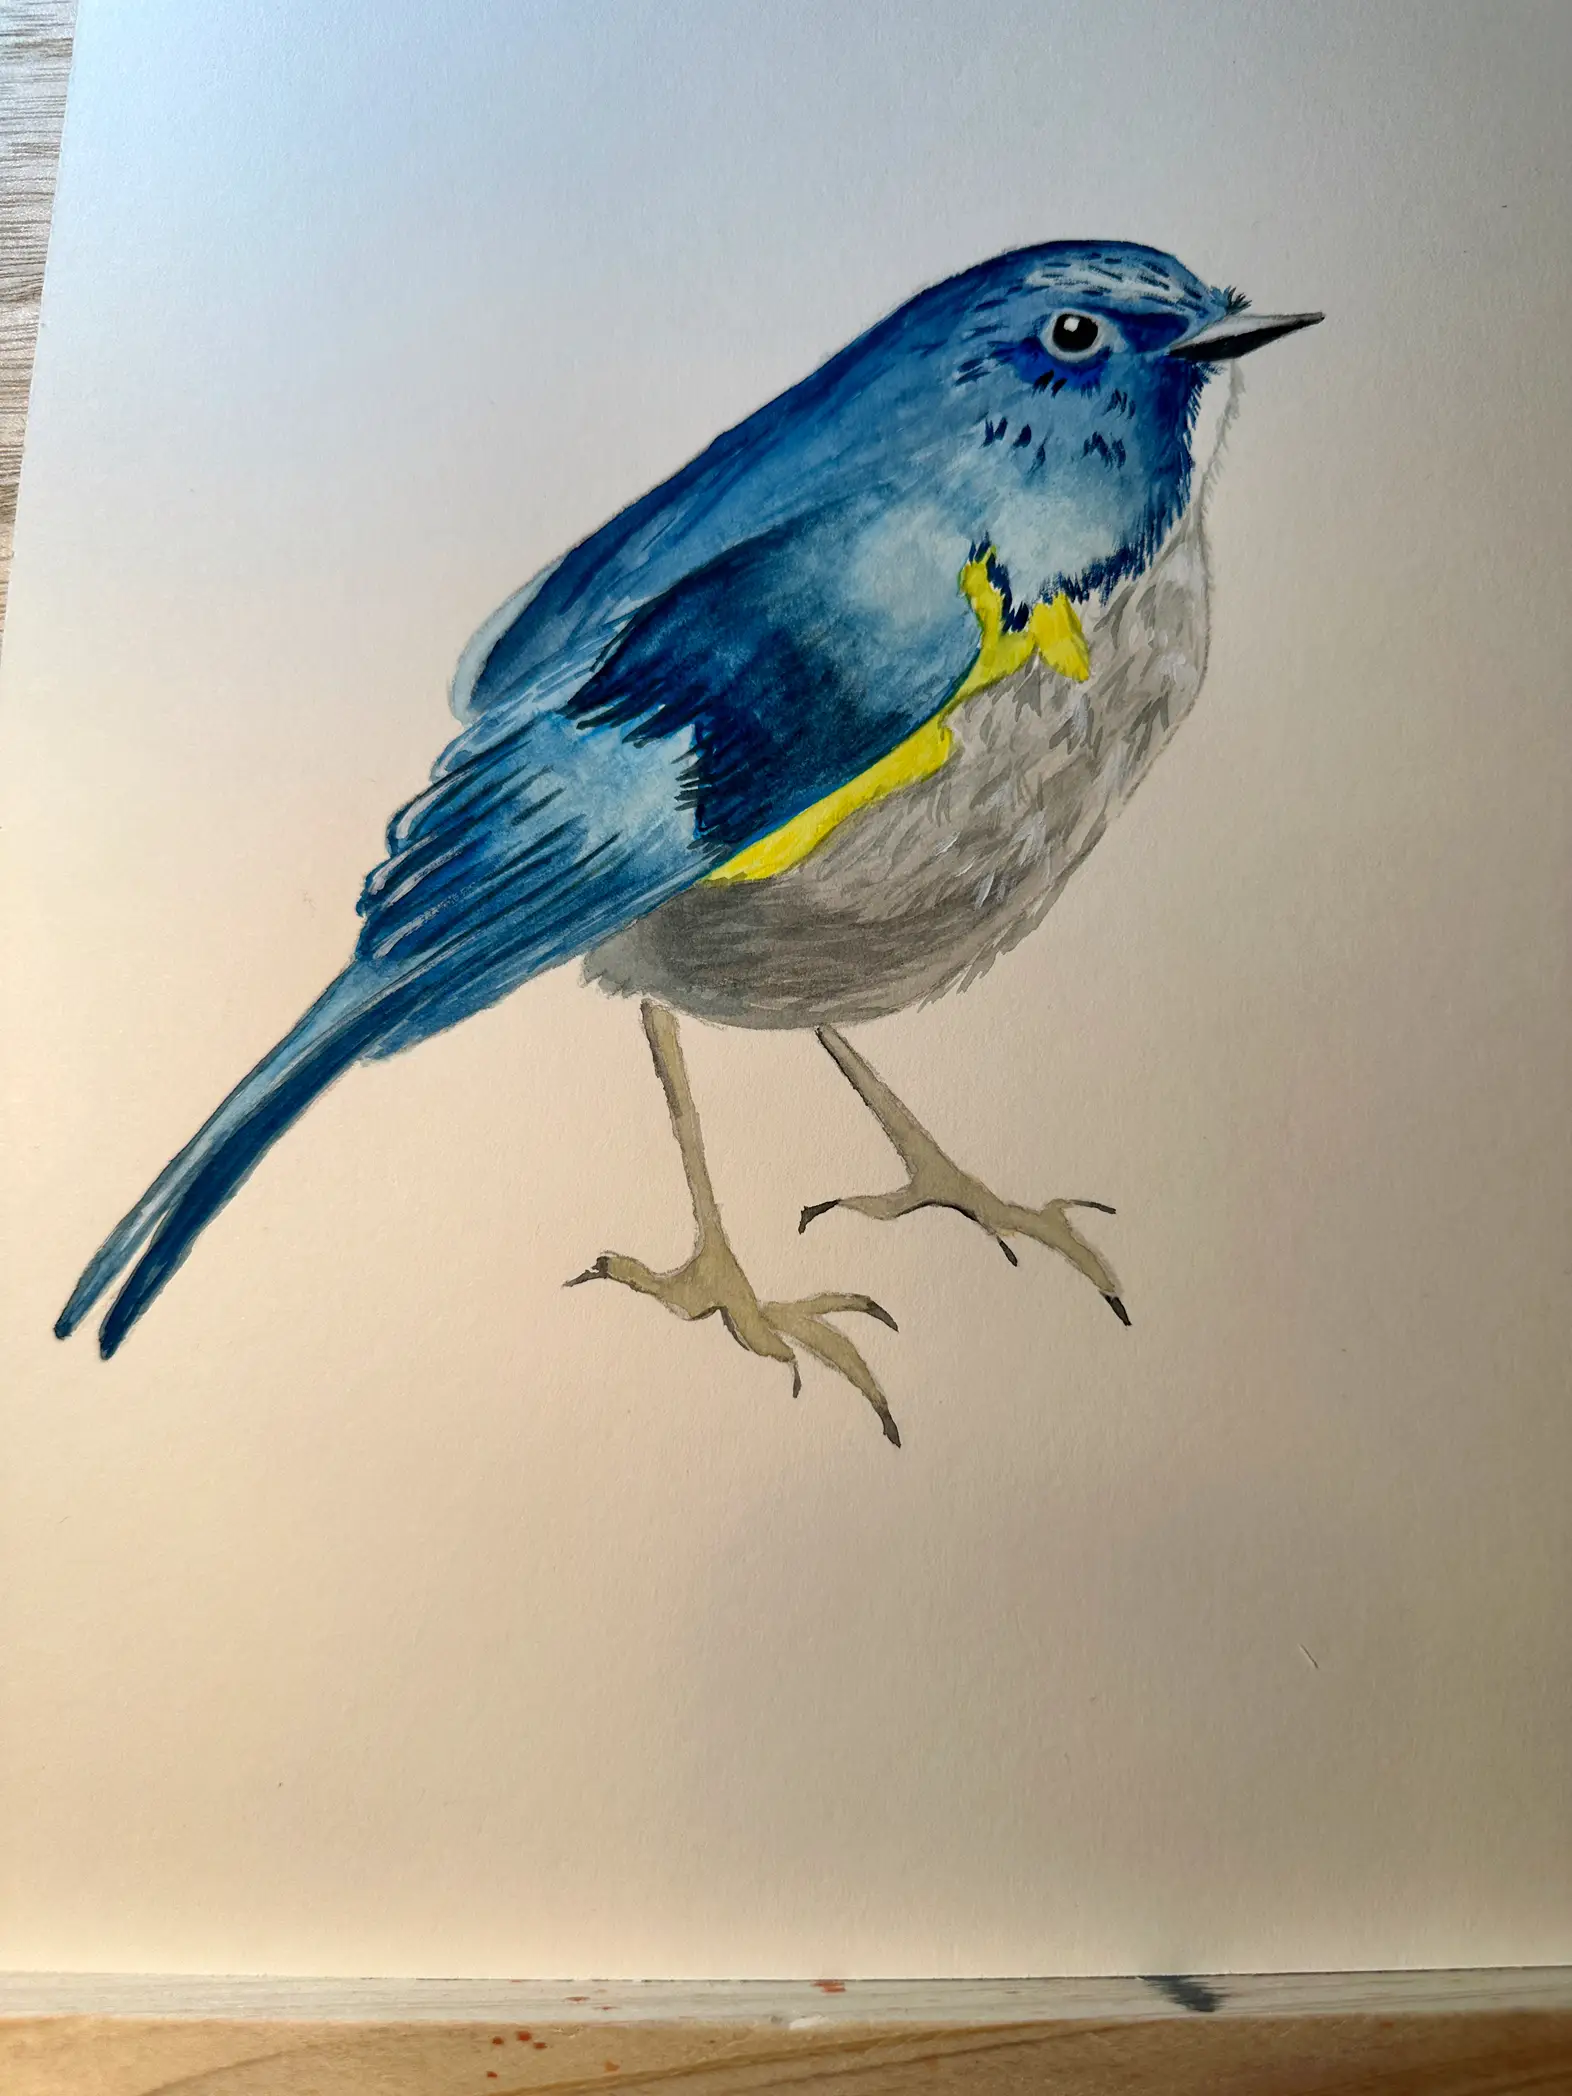 bird art and illustration - Lemon8 Search